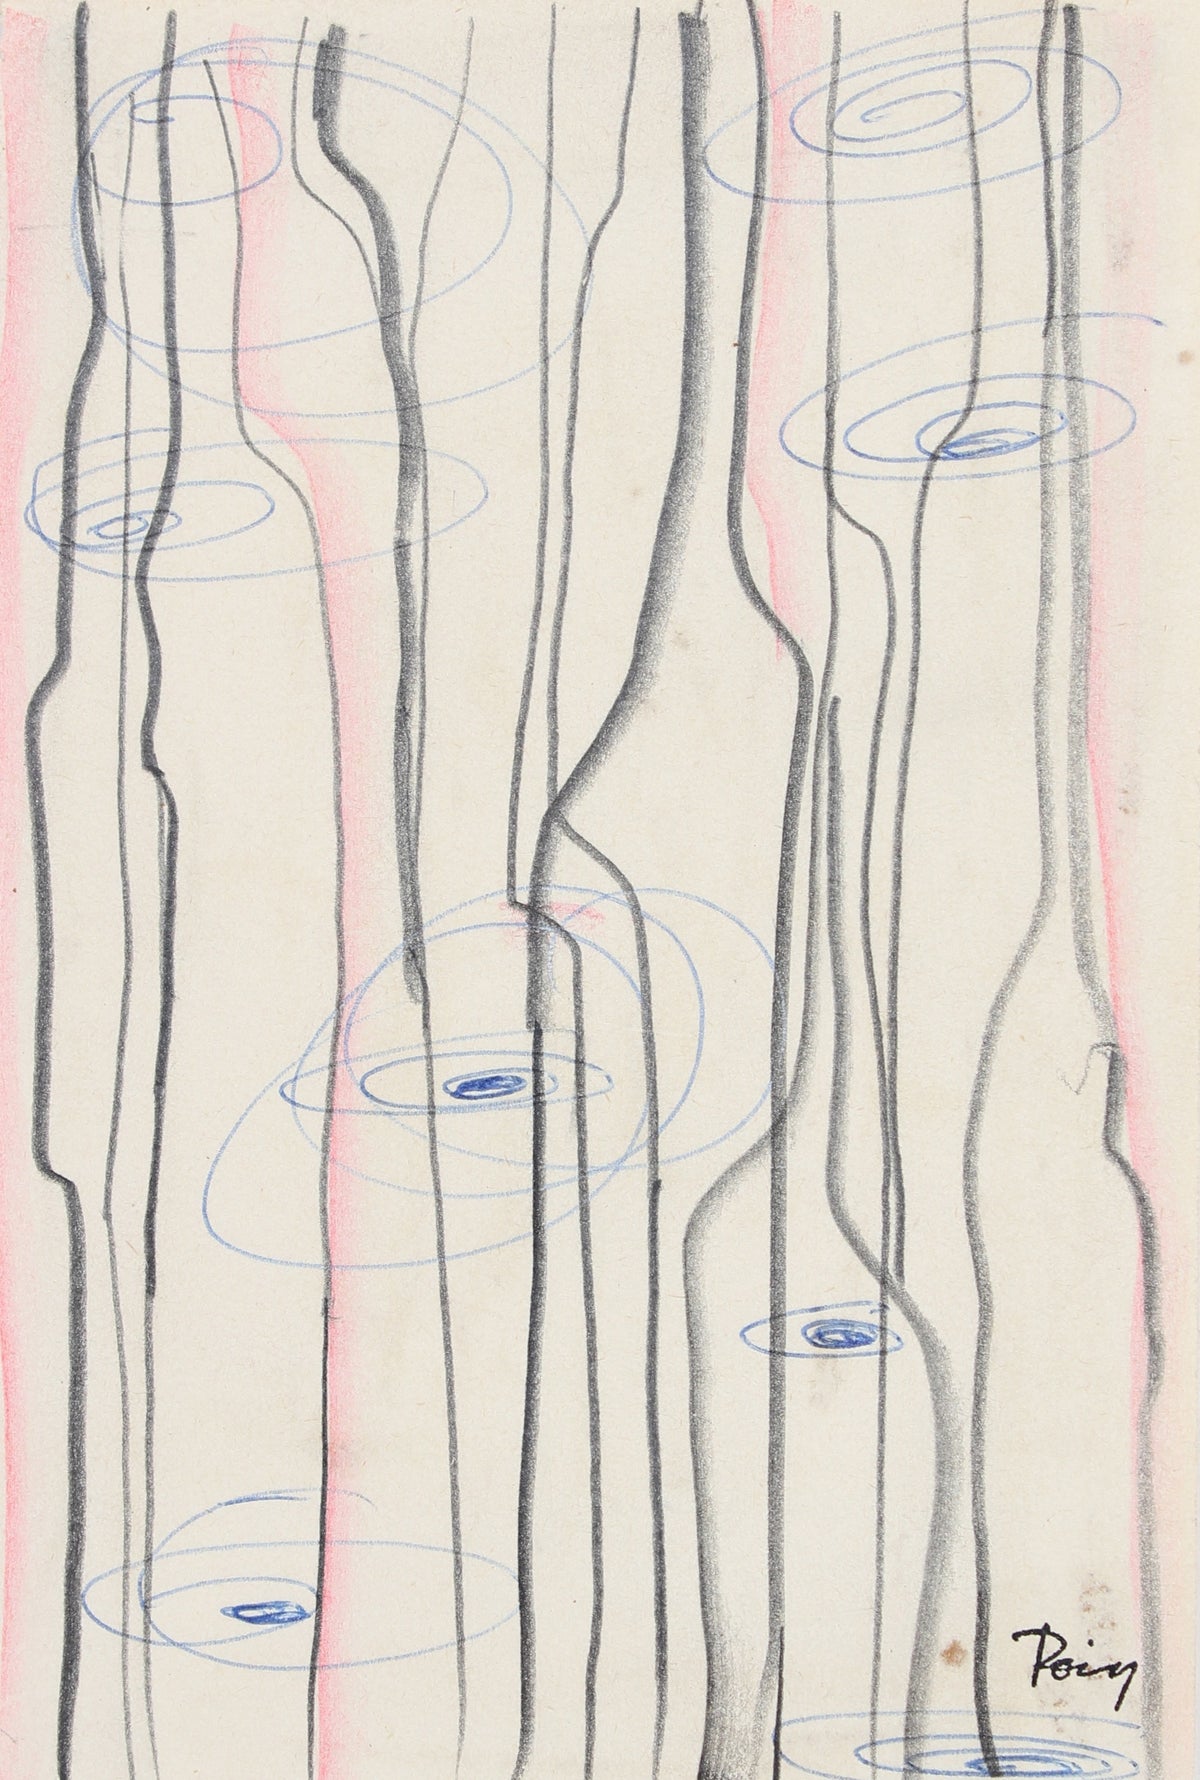 &lt;i&gt;Intra-Venous&lt;/i&gt;&lt;br&gt;Late 1960s Ink, Graphite &amp; Colored Pencil&lt;br&gt;&lt;br&gt;#96864